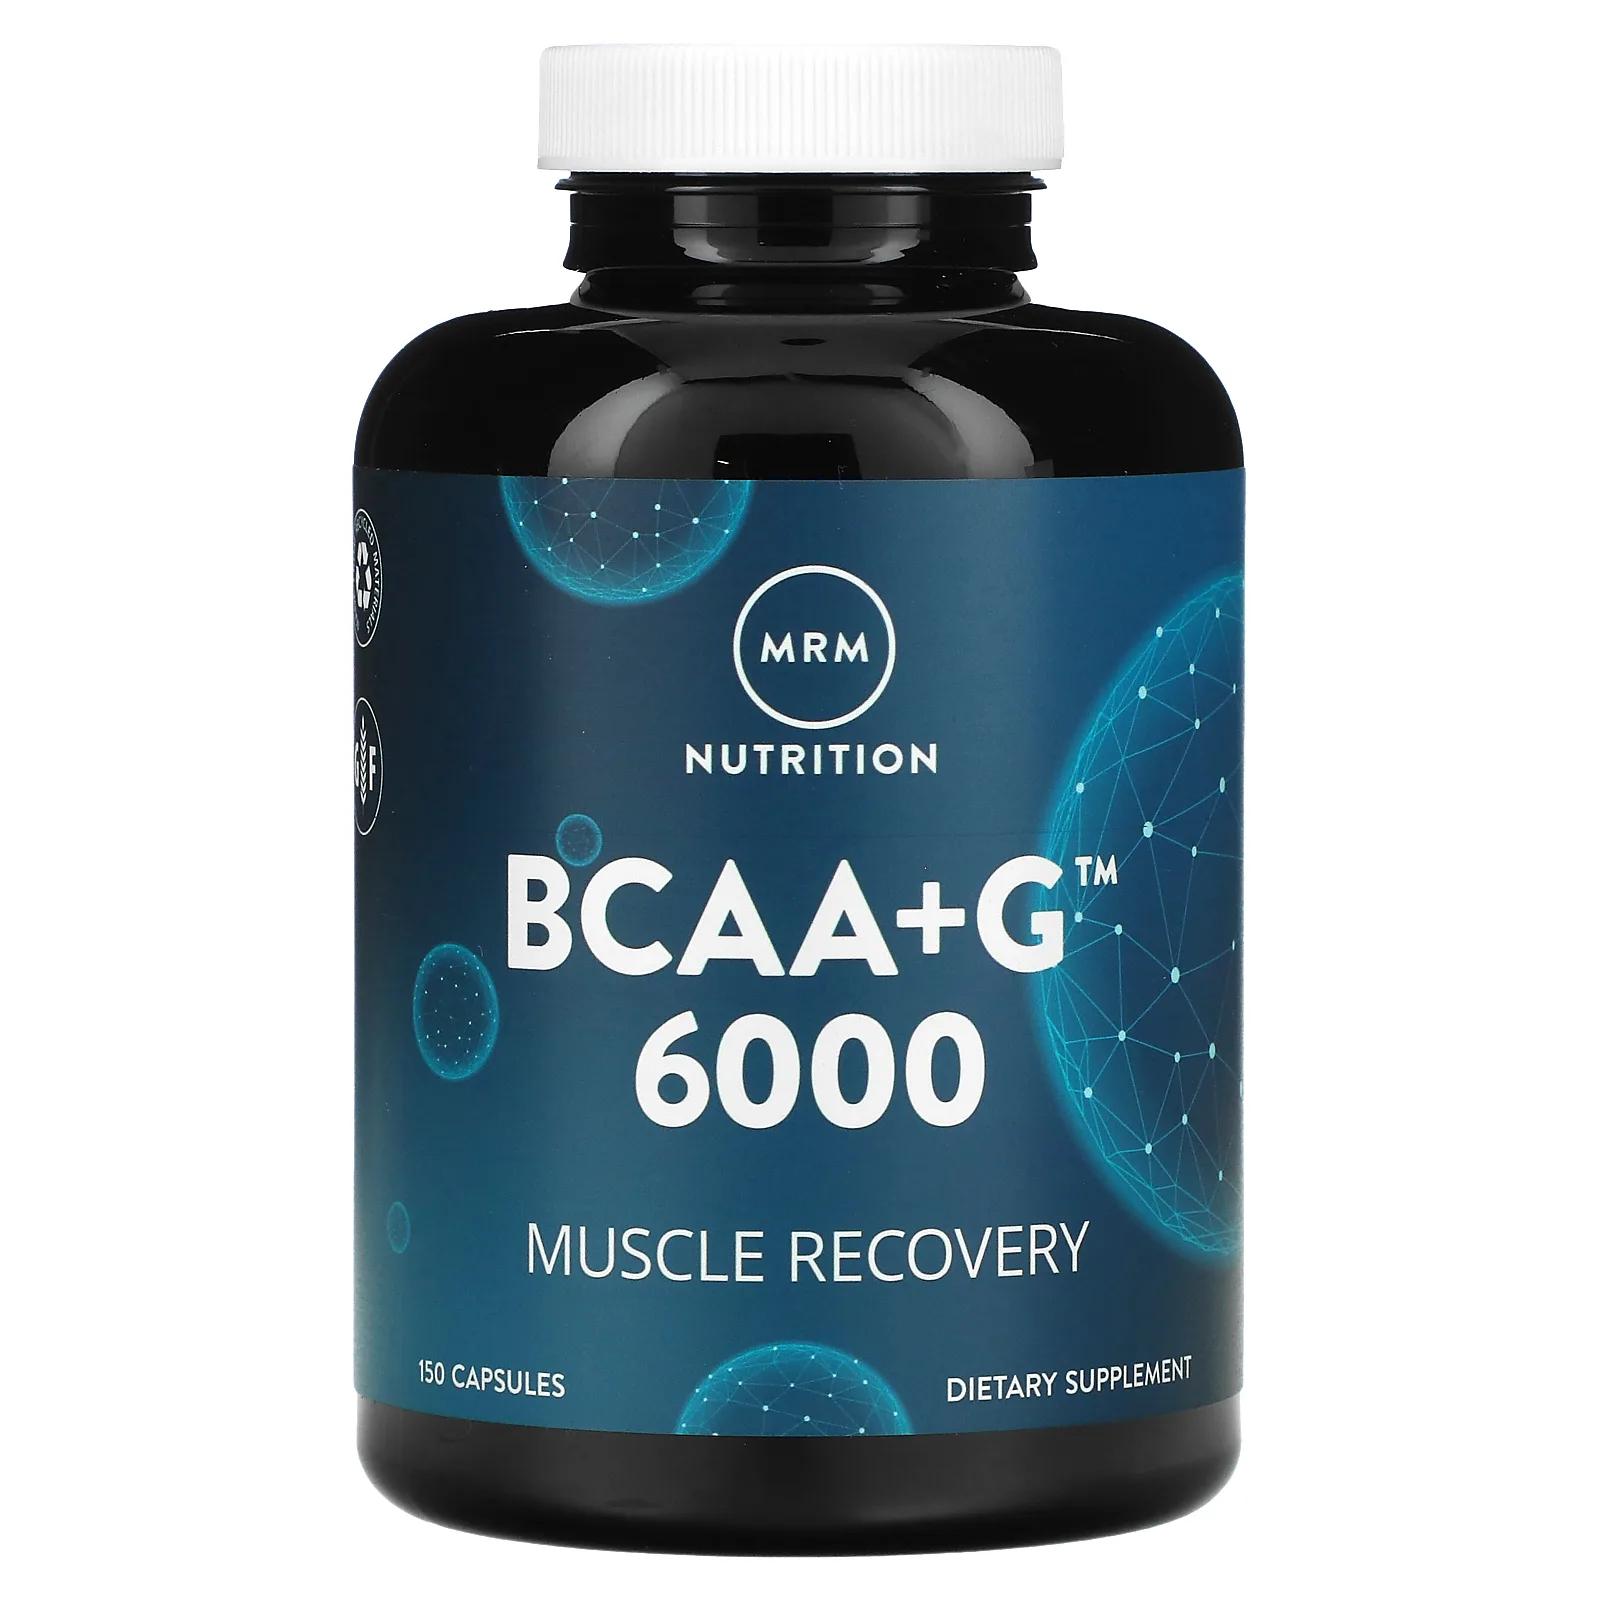 MRM BCAA+G 6000 150 капсул mrm nutrition nutrition bcaa и g 6000 150 капсул